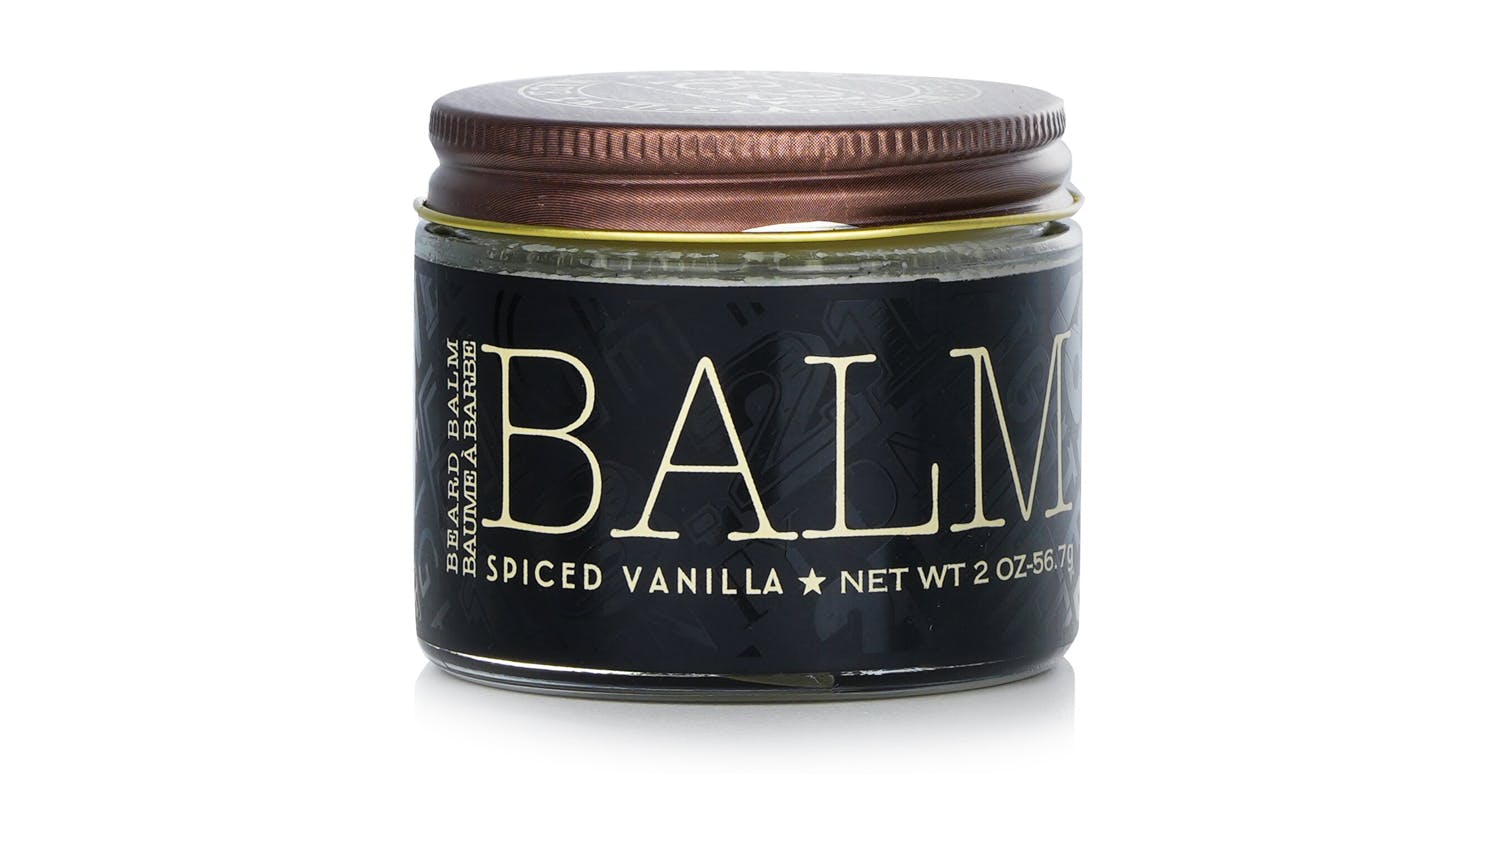 18.21 Man Made Beard Balm - # Spiced Vanilla - 56.7g/2oz